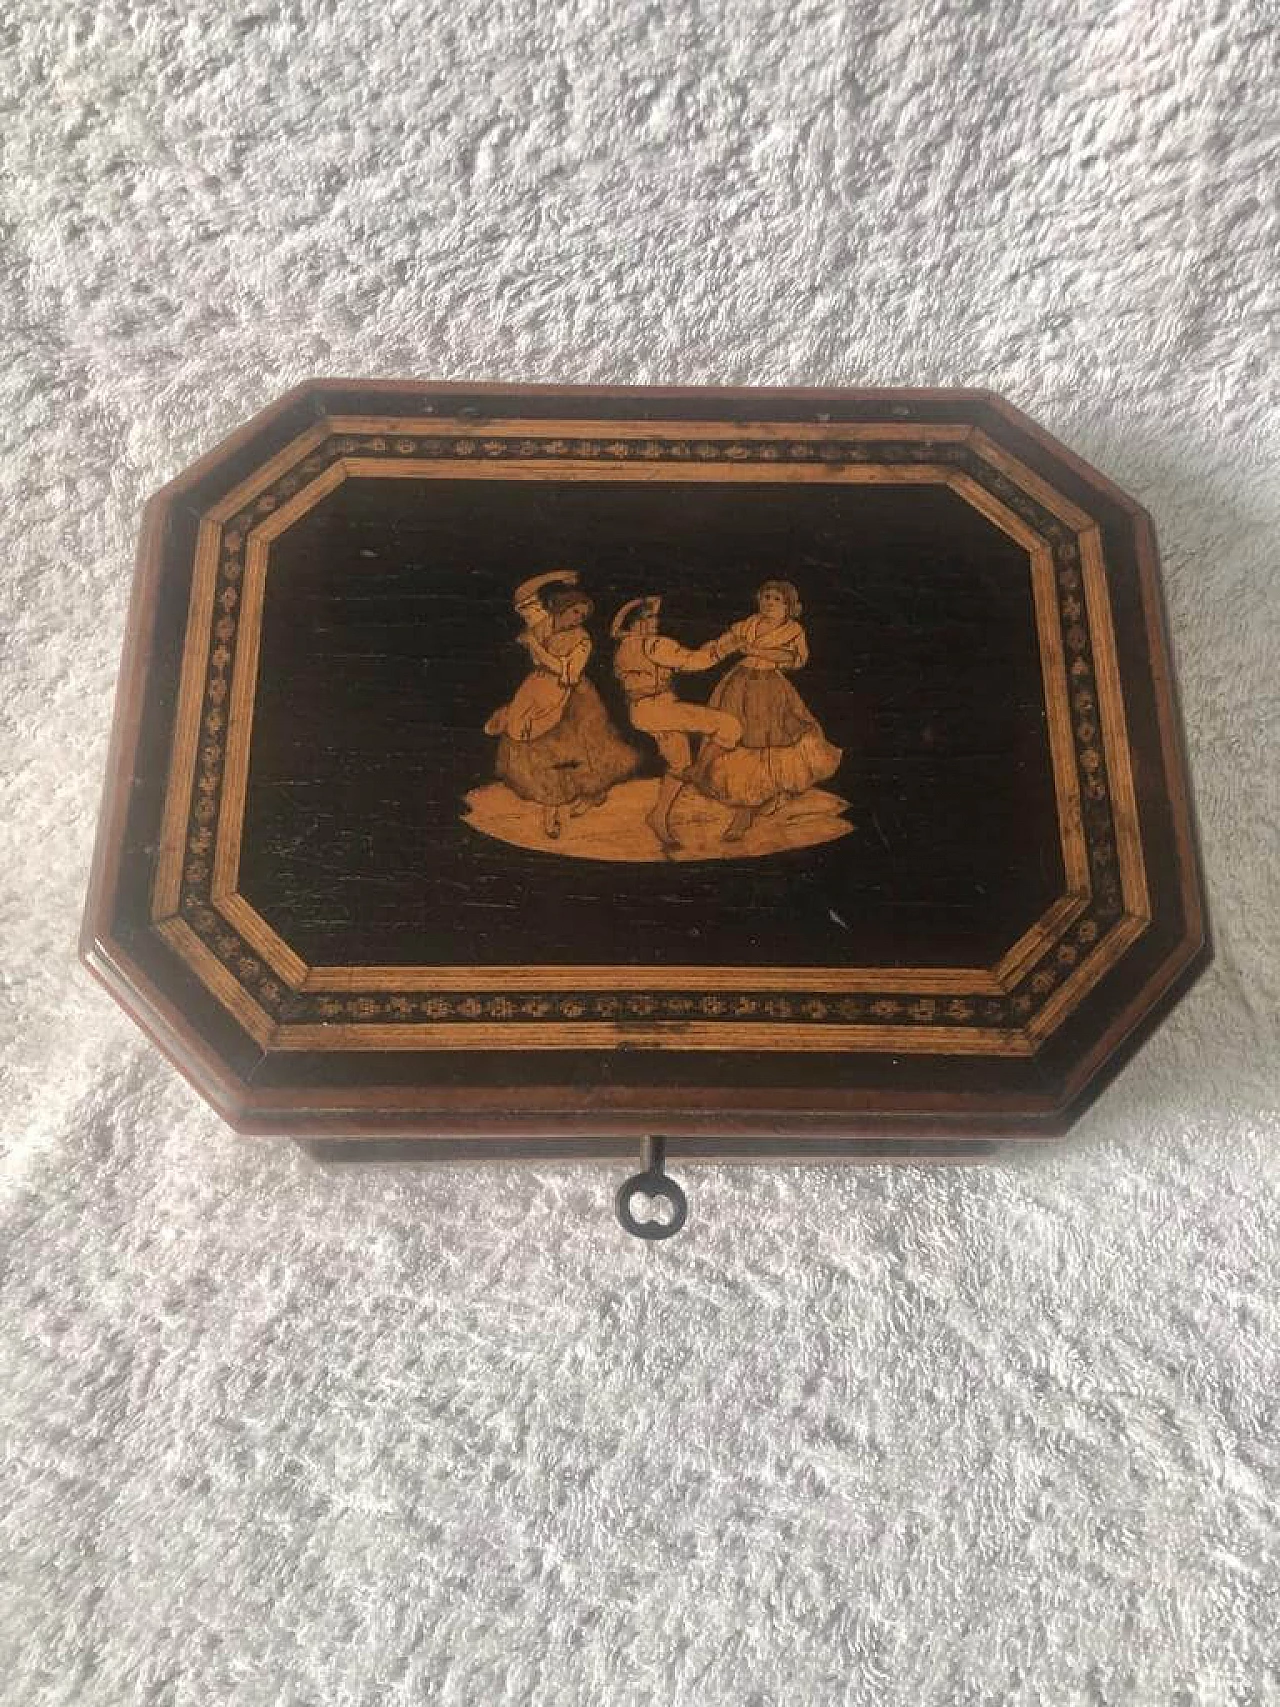 Sorrentine jewelry box in inlaid wood, 19th century 1400590